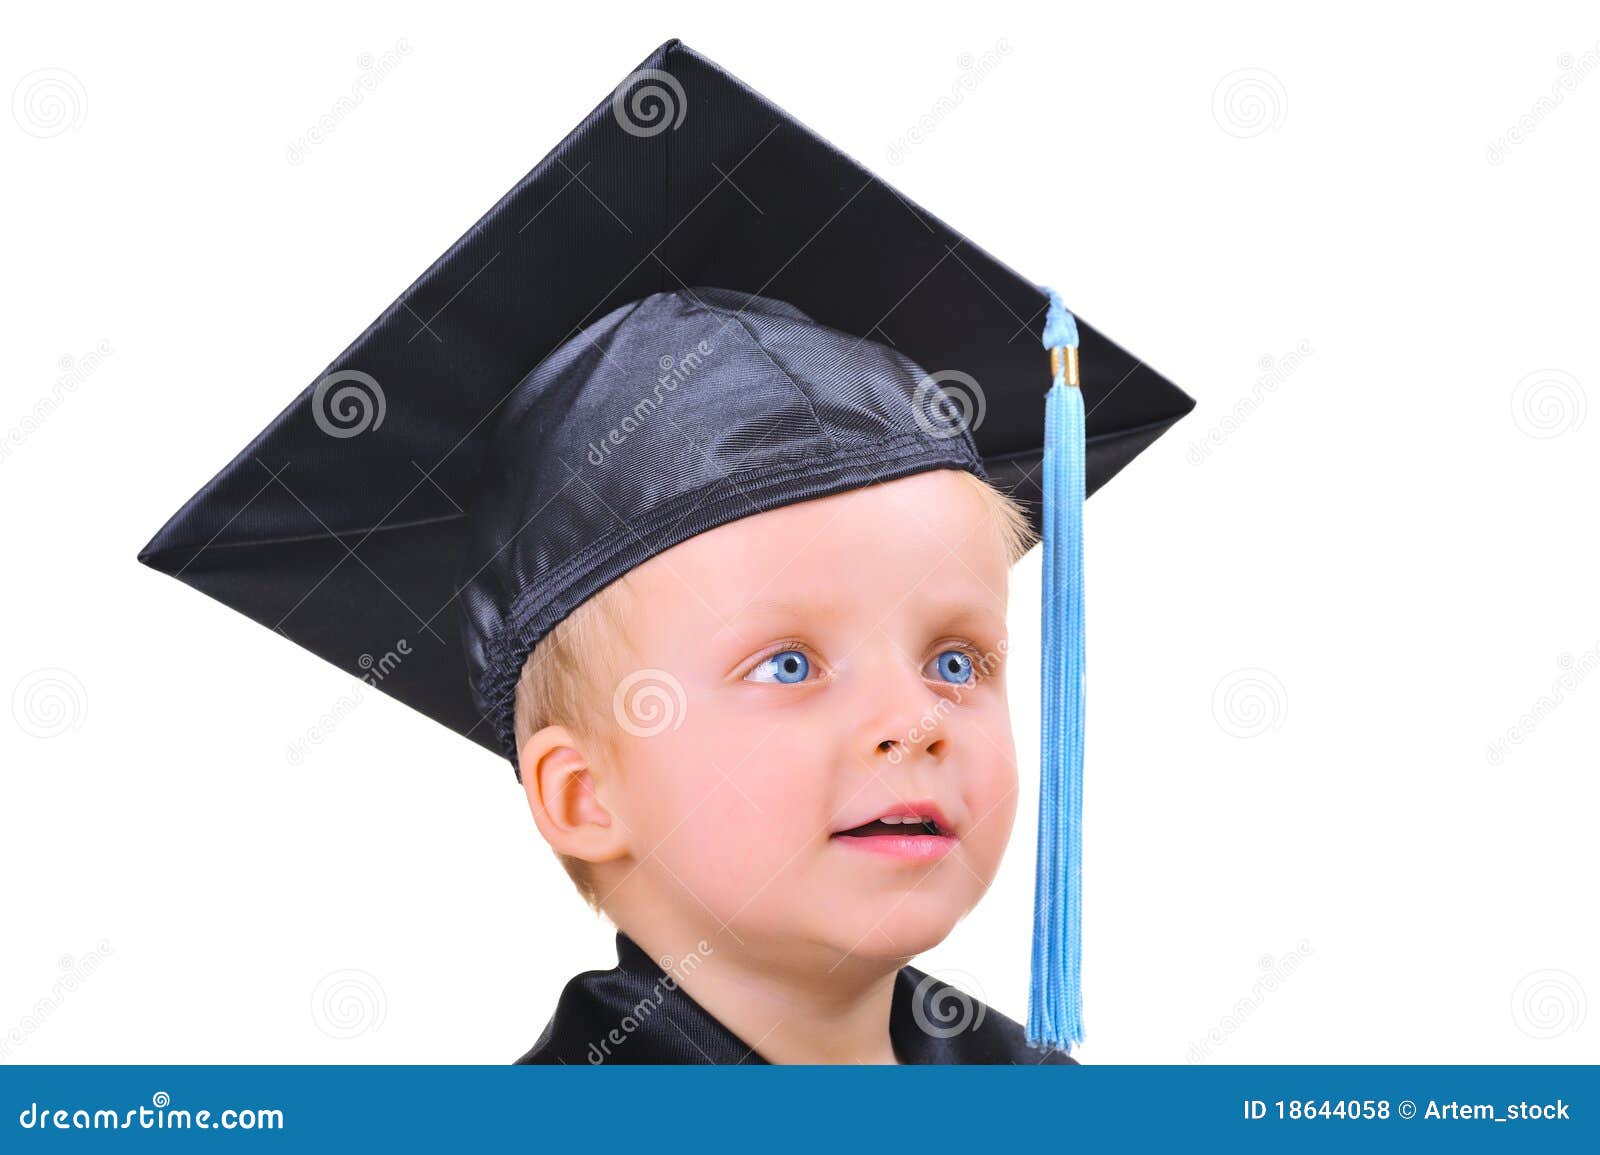 8 Colors Baby Graduation Cap and Gown/robe Outfit for | Etsy UK | Graduation  cap and gown, Cap and gown, Graduation cap